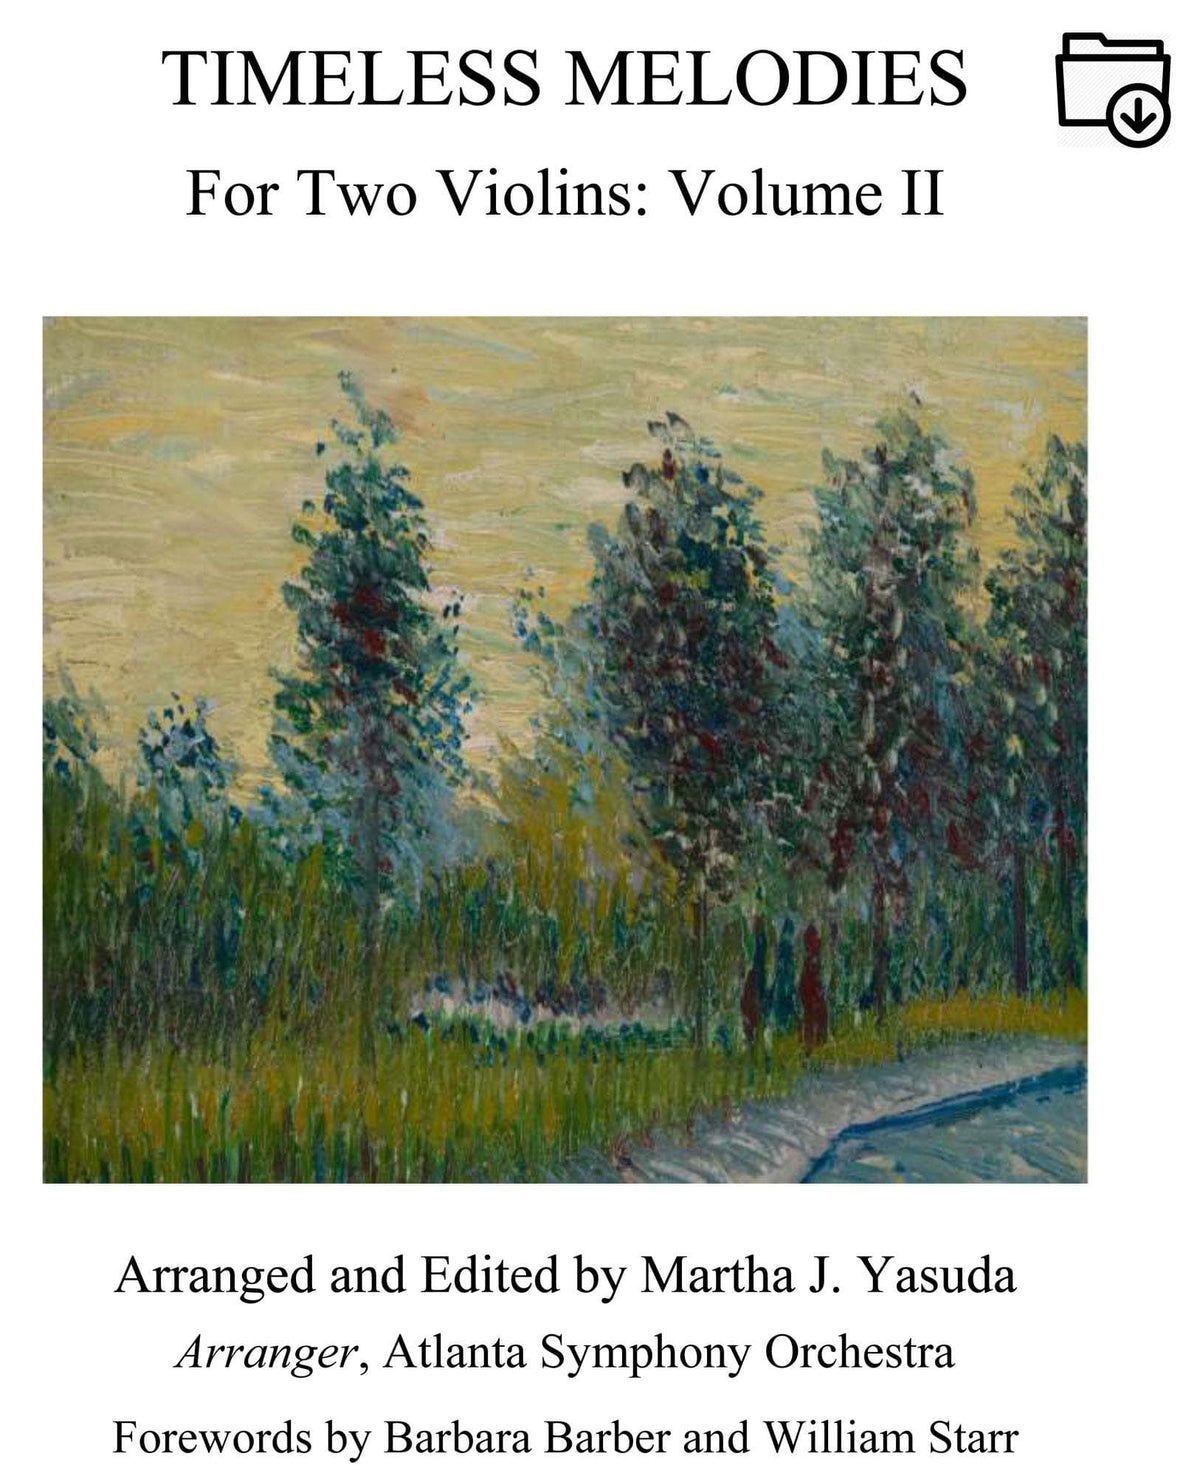 Yasuda, Martha - Timeless Melodies For Two Violins, Volume II - Digital Download